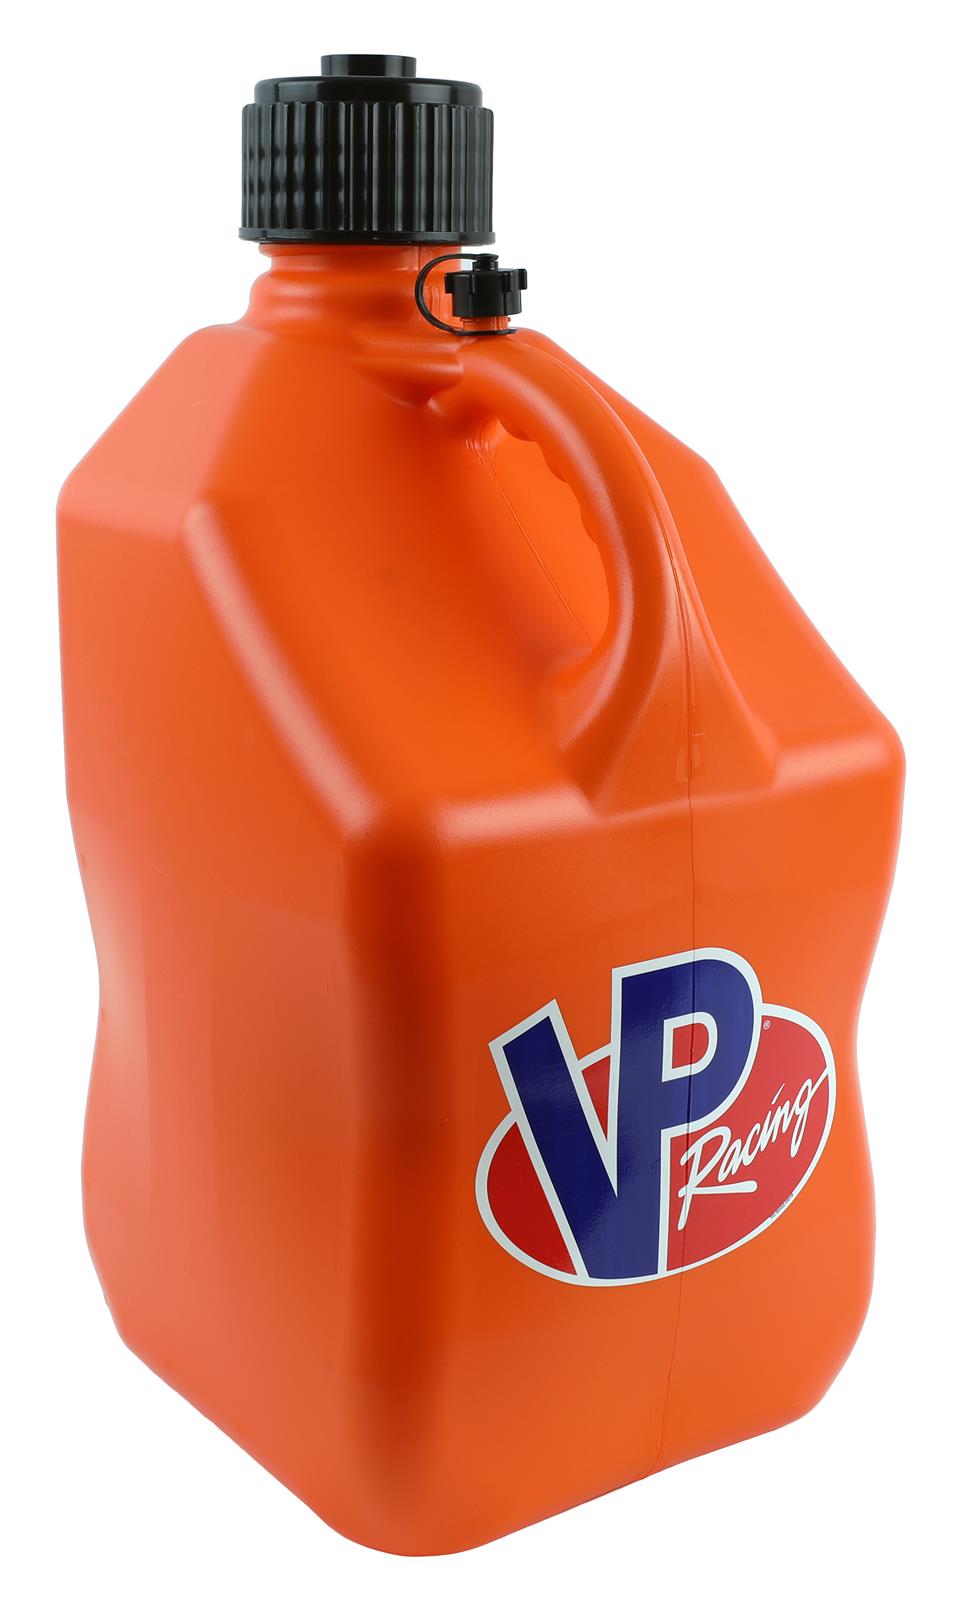 VP Racing Motorsports Fuel Jug - 5.5 gallons - Orange